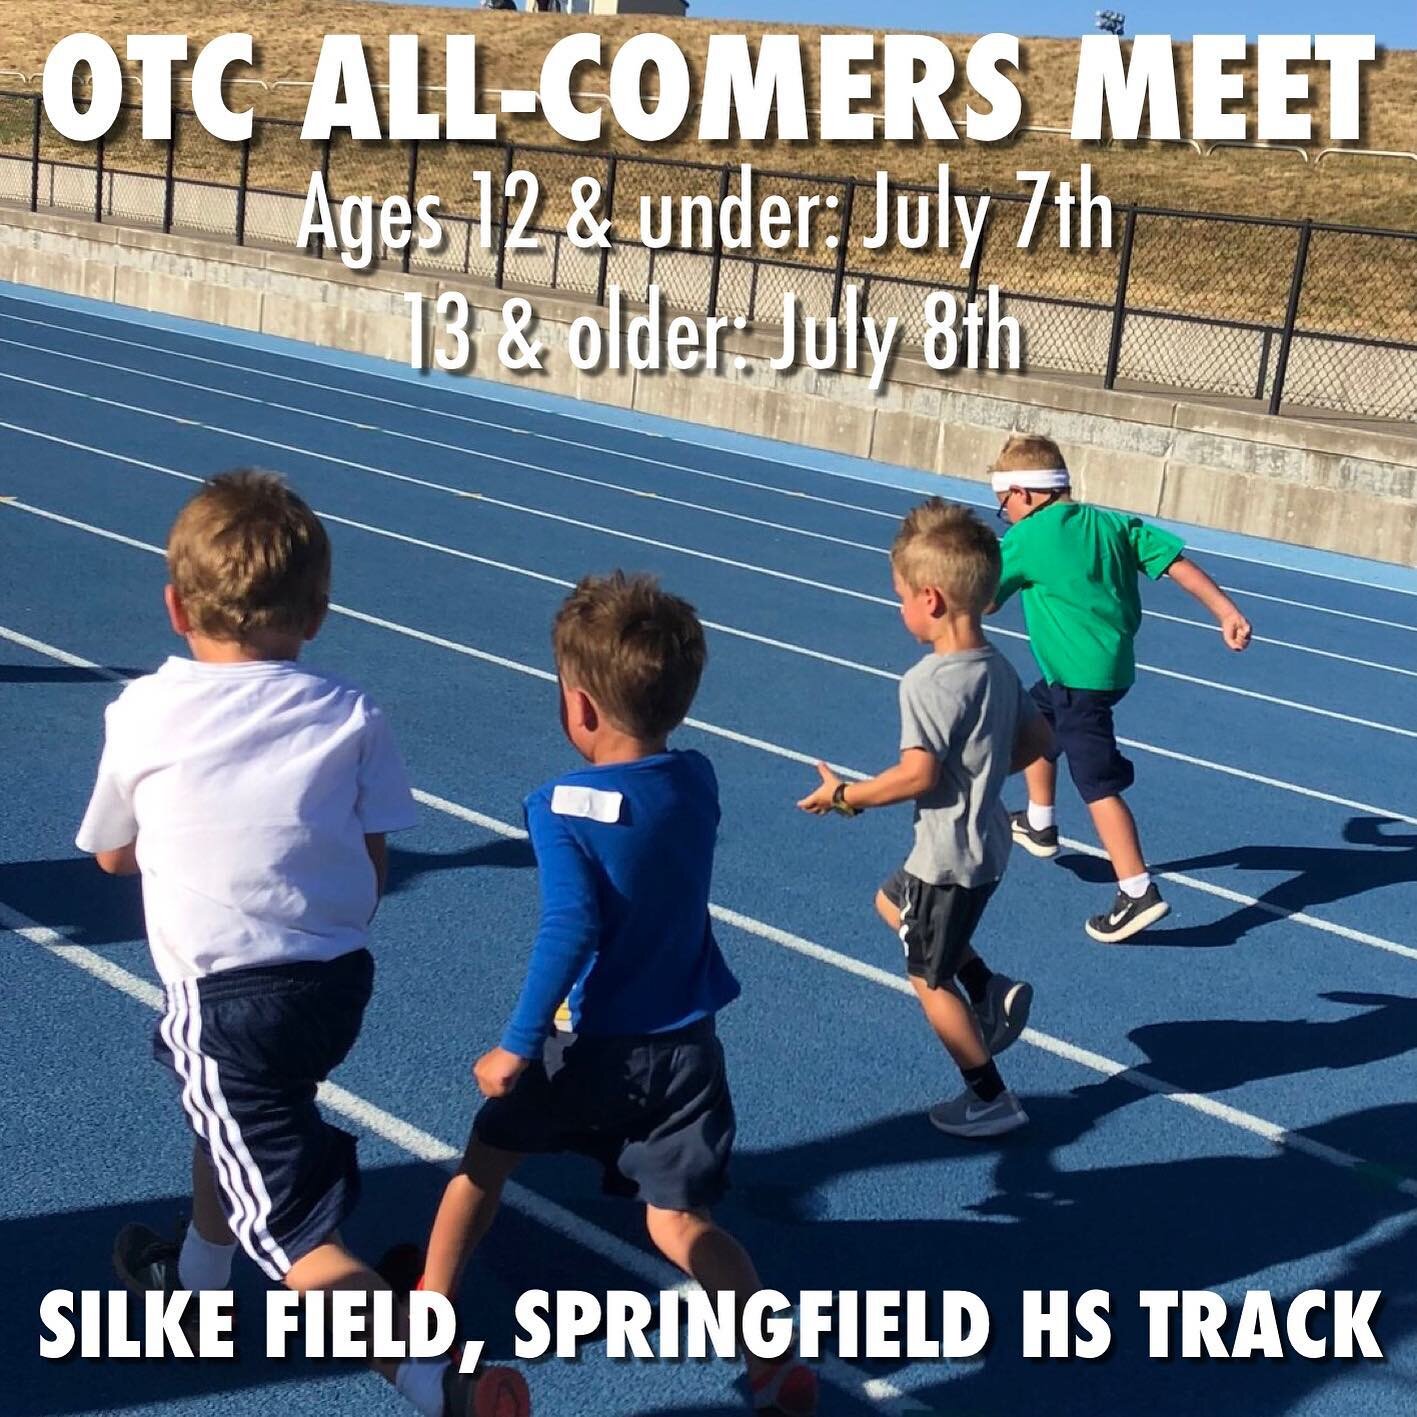 OTC Summer All-Comers meets are back! Register online at oregontrackclub.com!
#WeAreTree